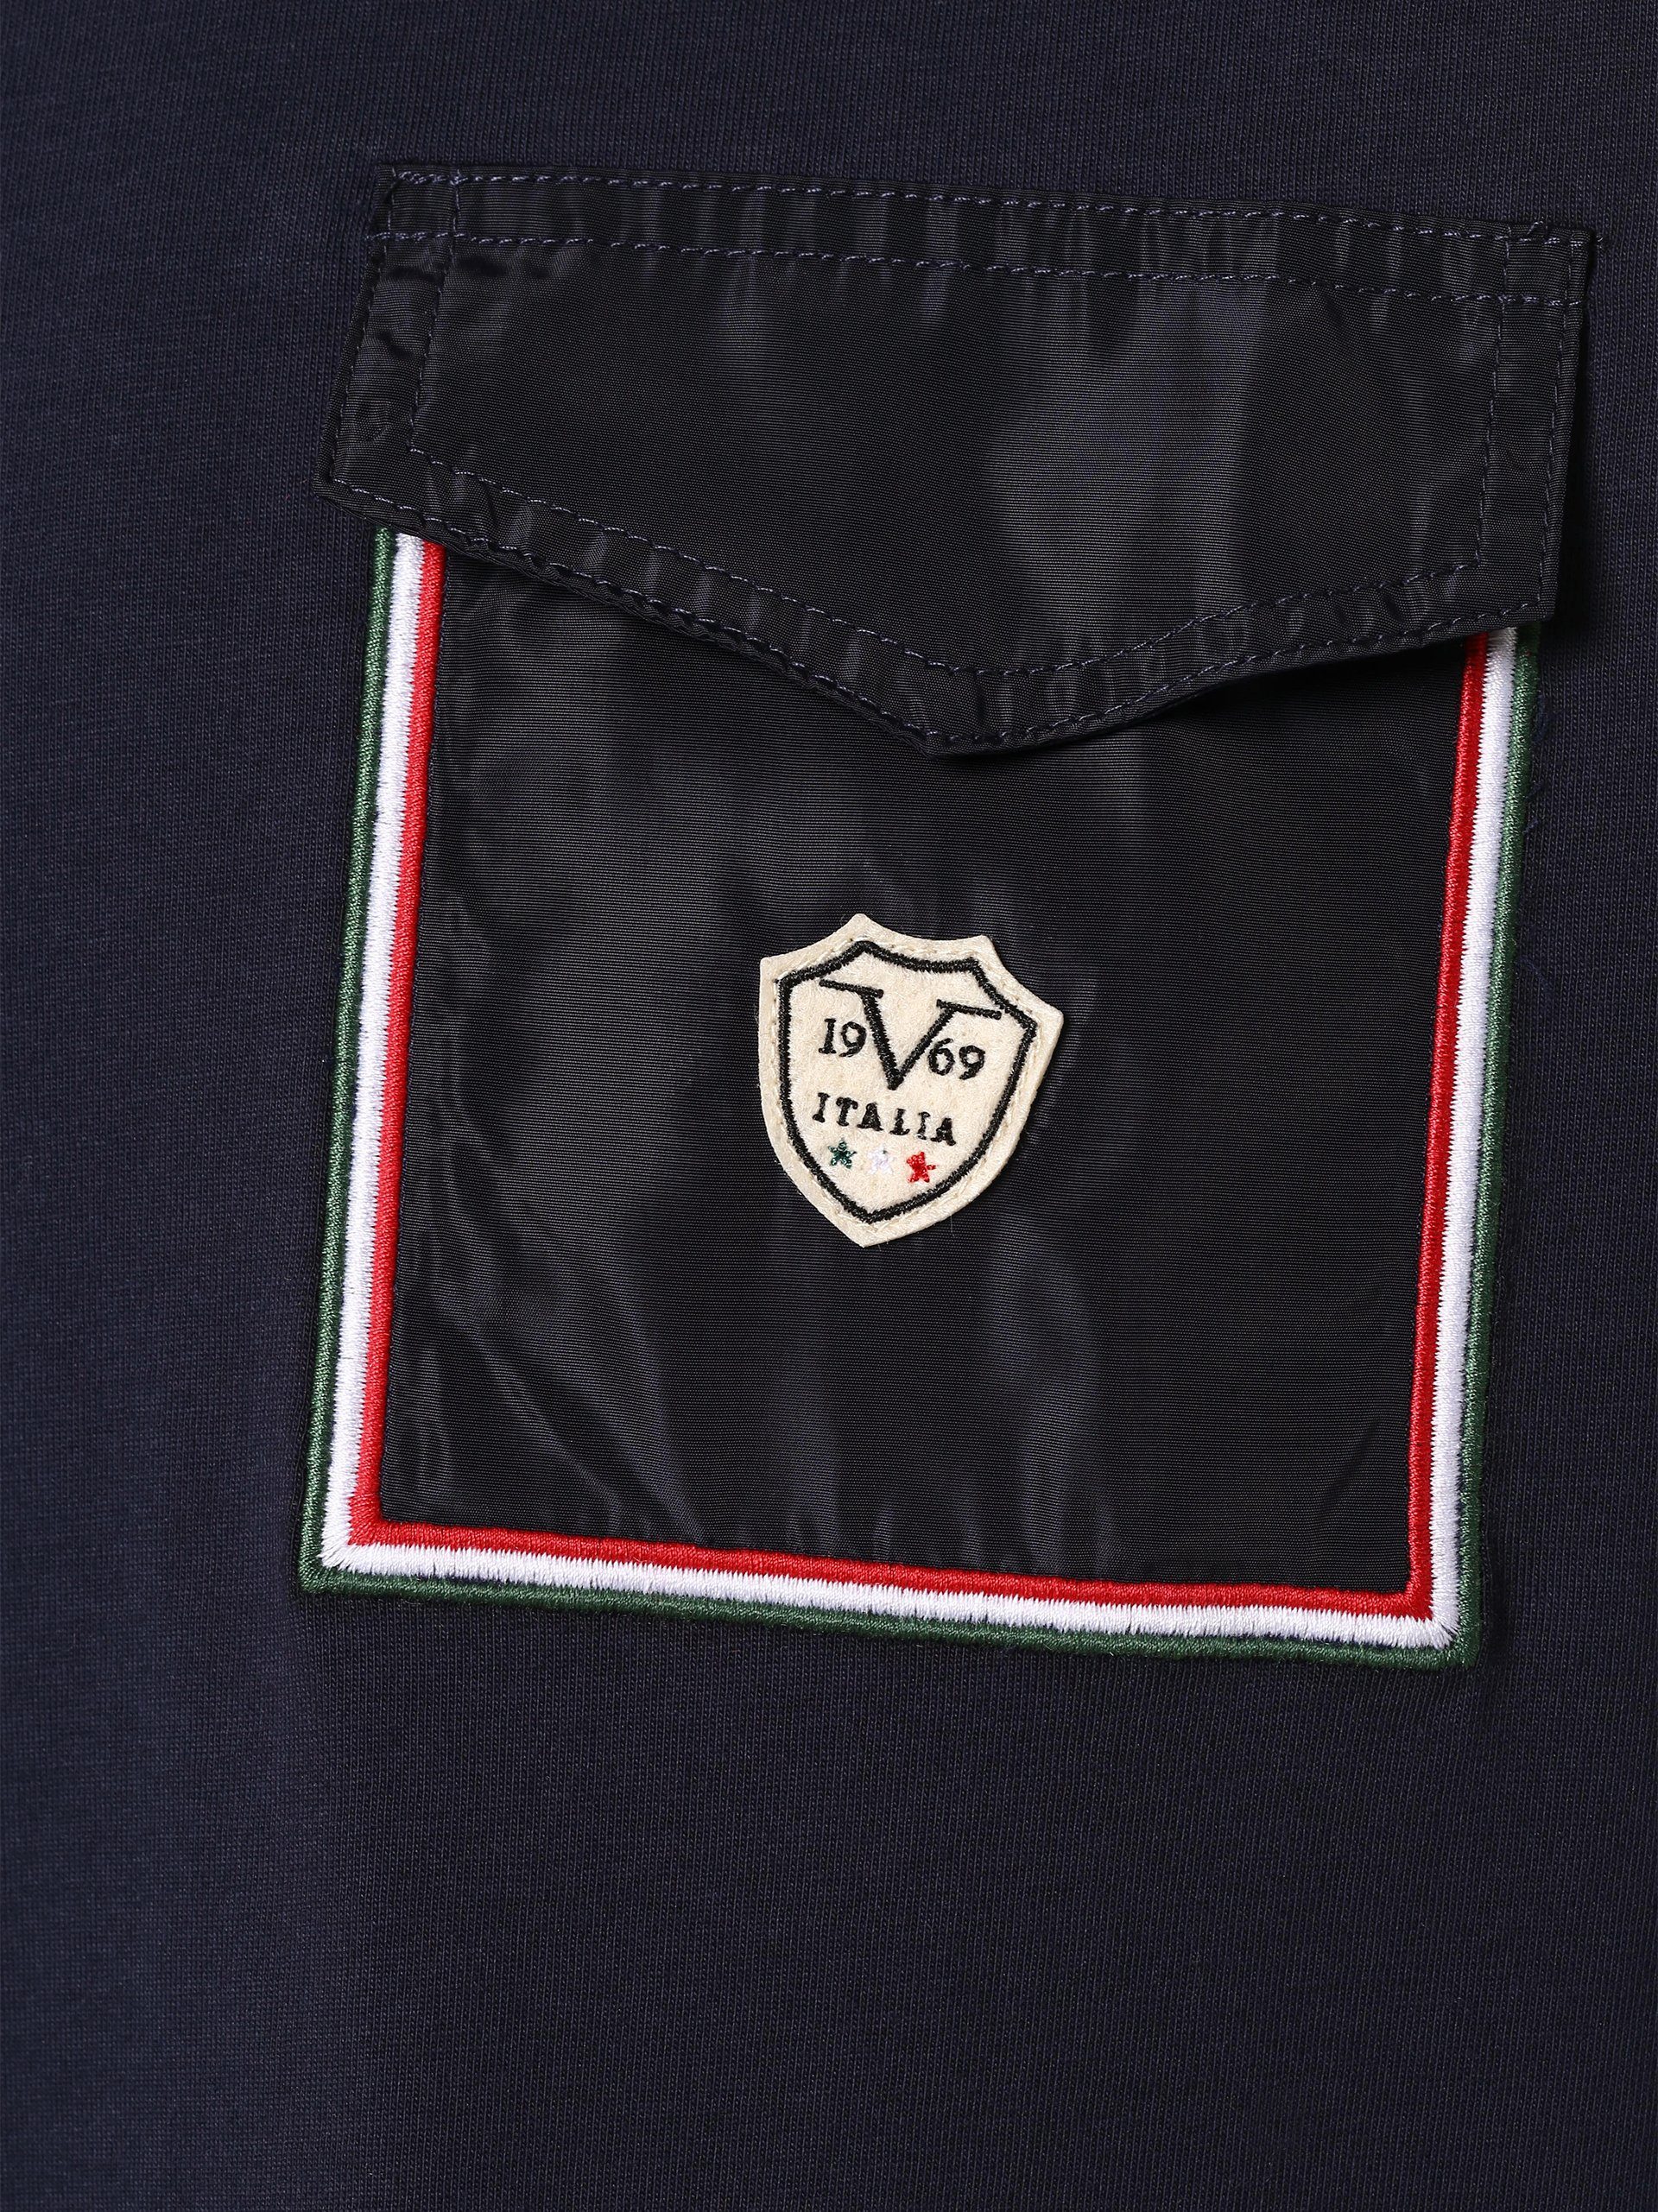 Versace 19V69 MILITARY Italia Italia T-Shirt by 19V69 Lucius GREEN